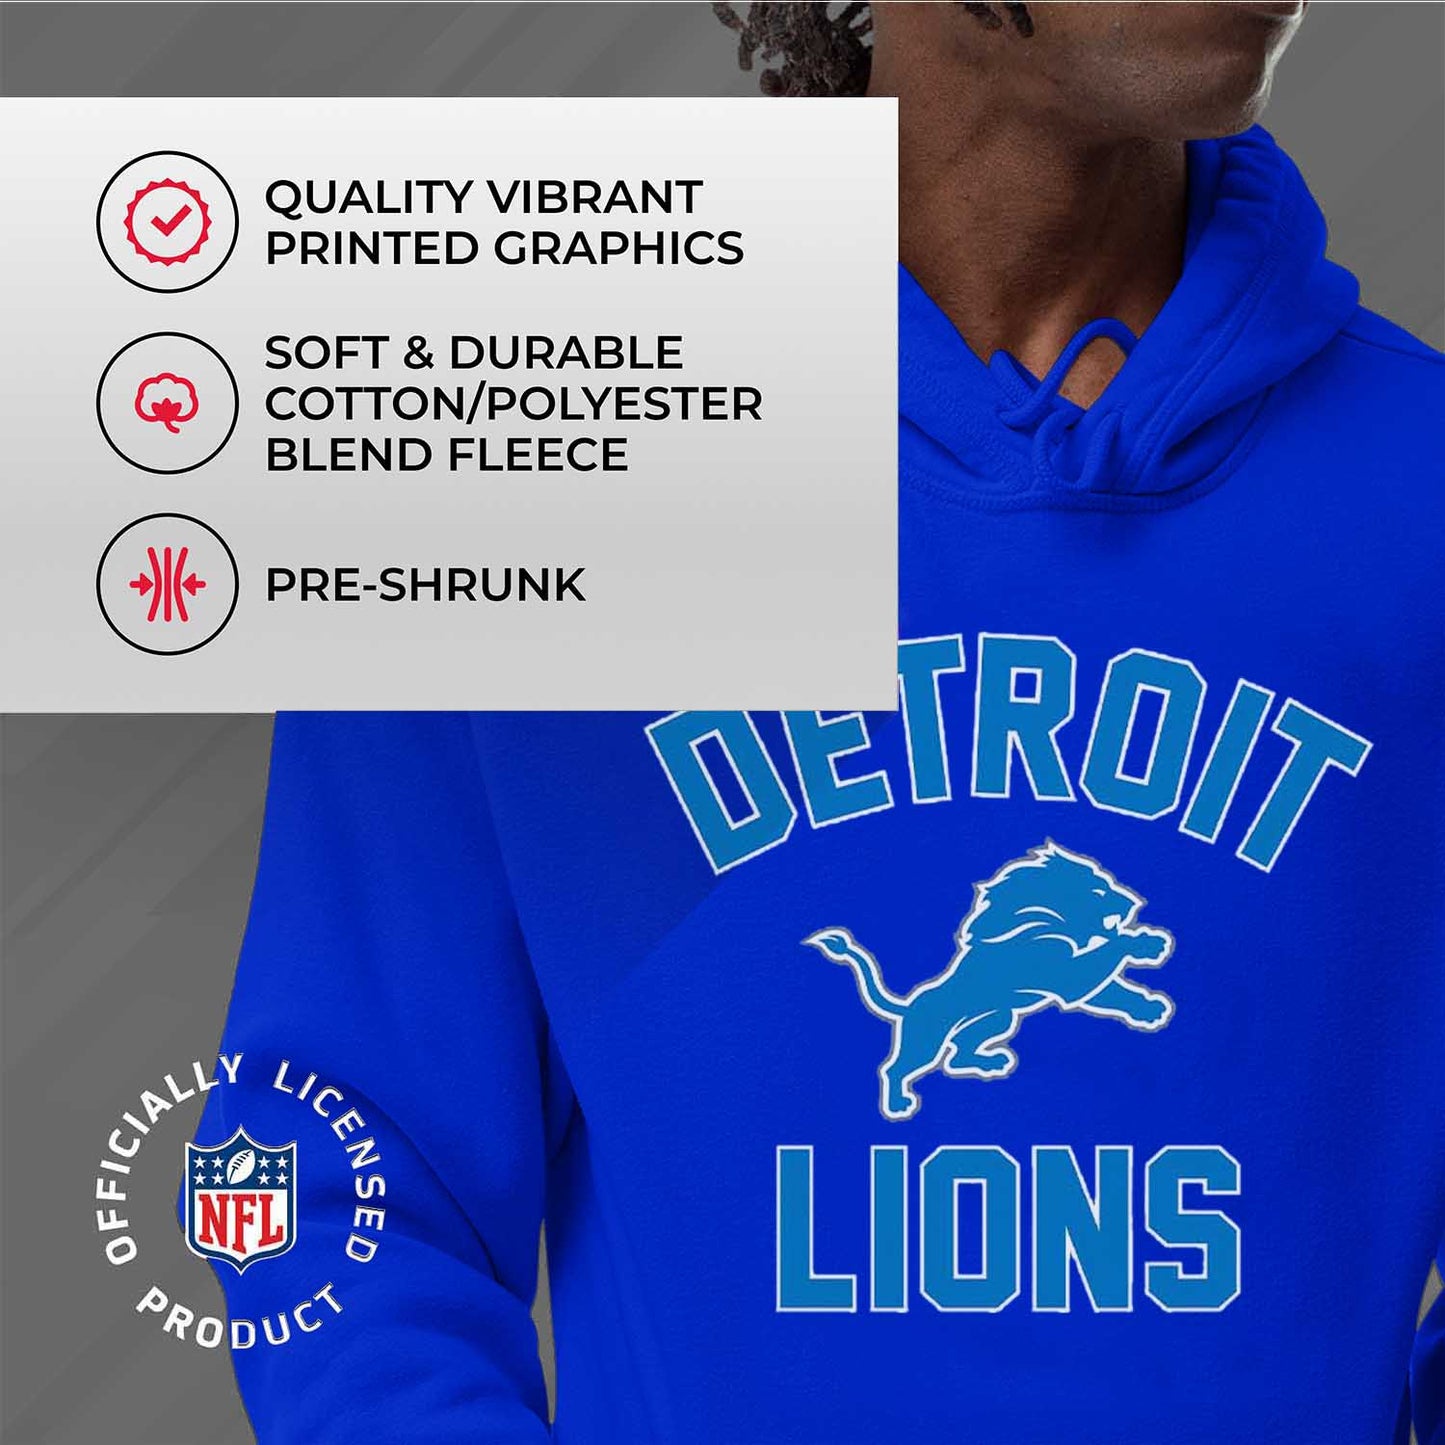 Detroit Lions NFL Adult Gameday Hooded Sweatshirt - Royal